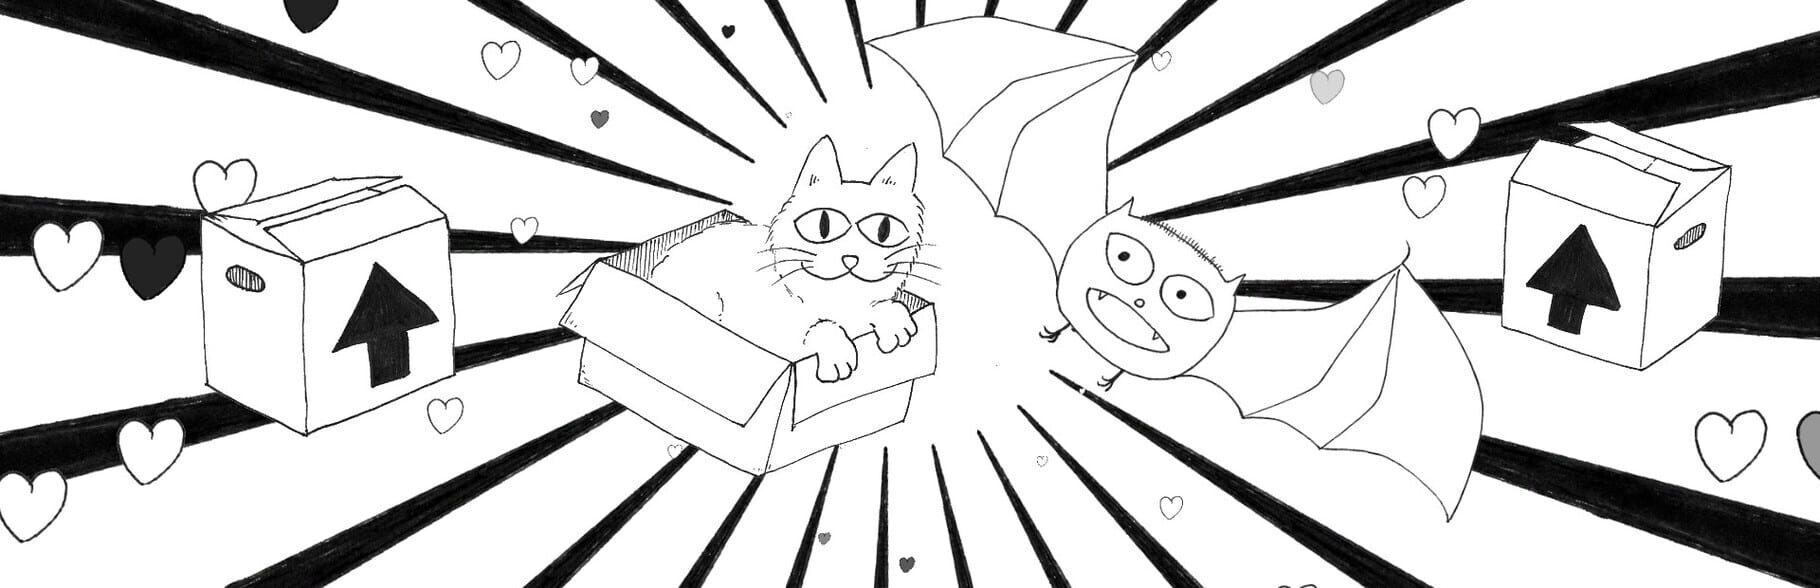 Catty & Batty: The Spirit Guide artwork